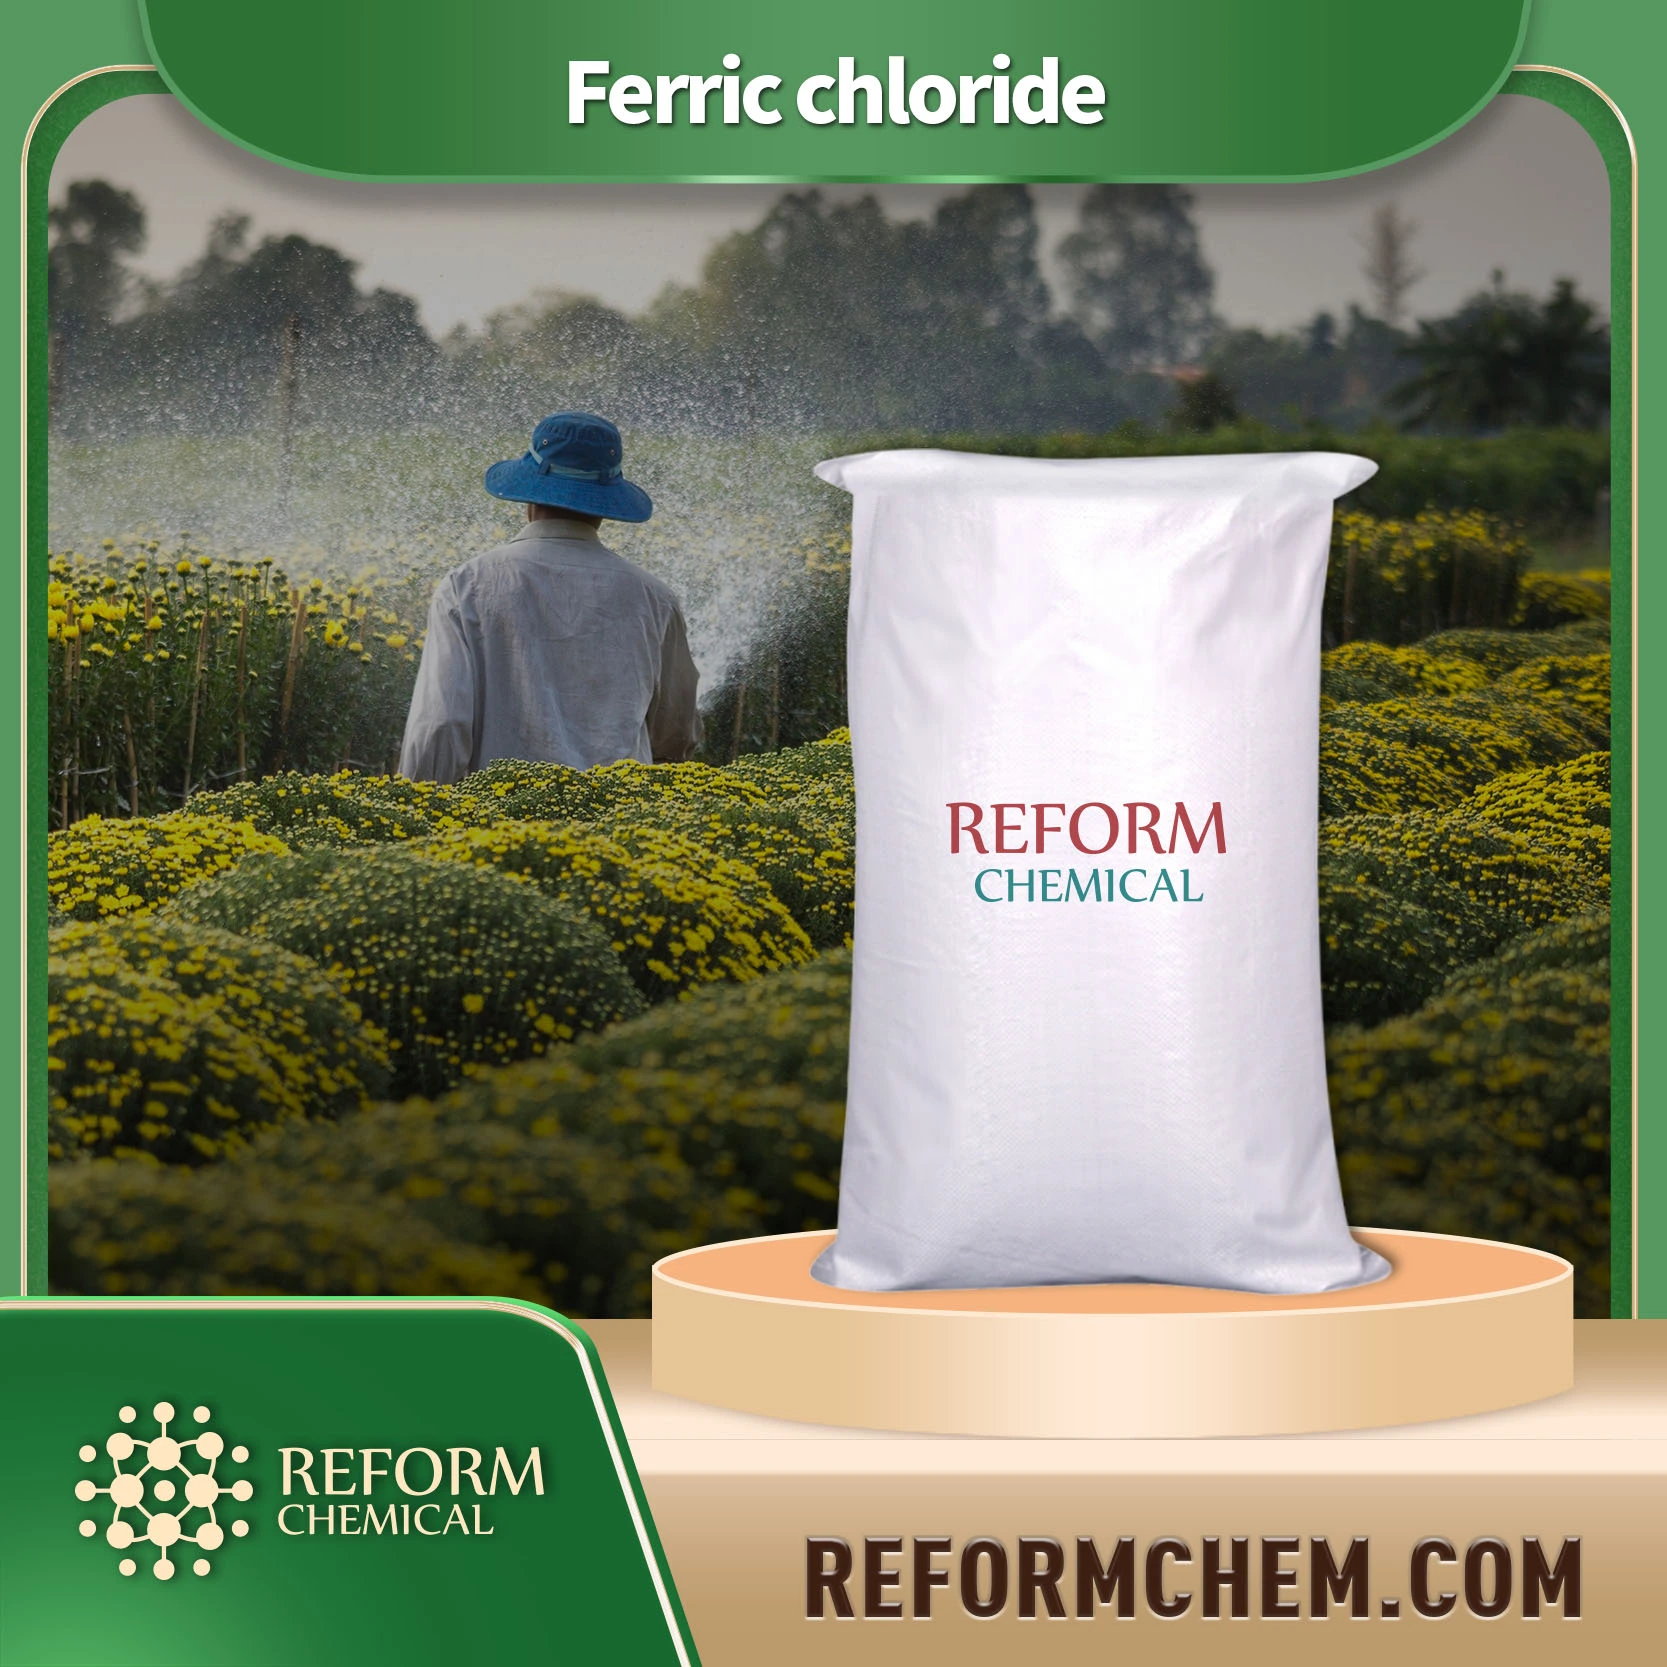 Ferric chloride